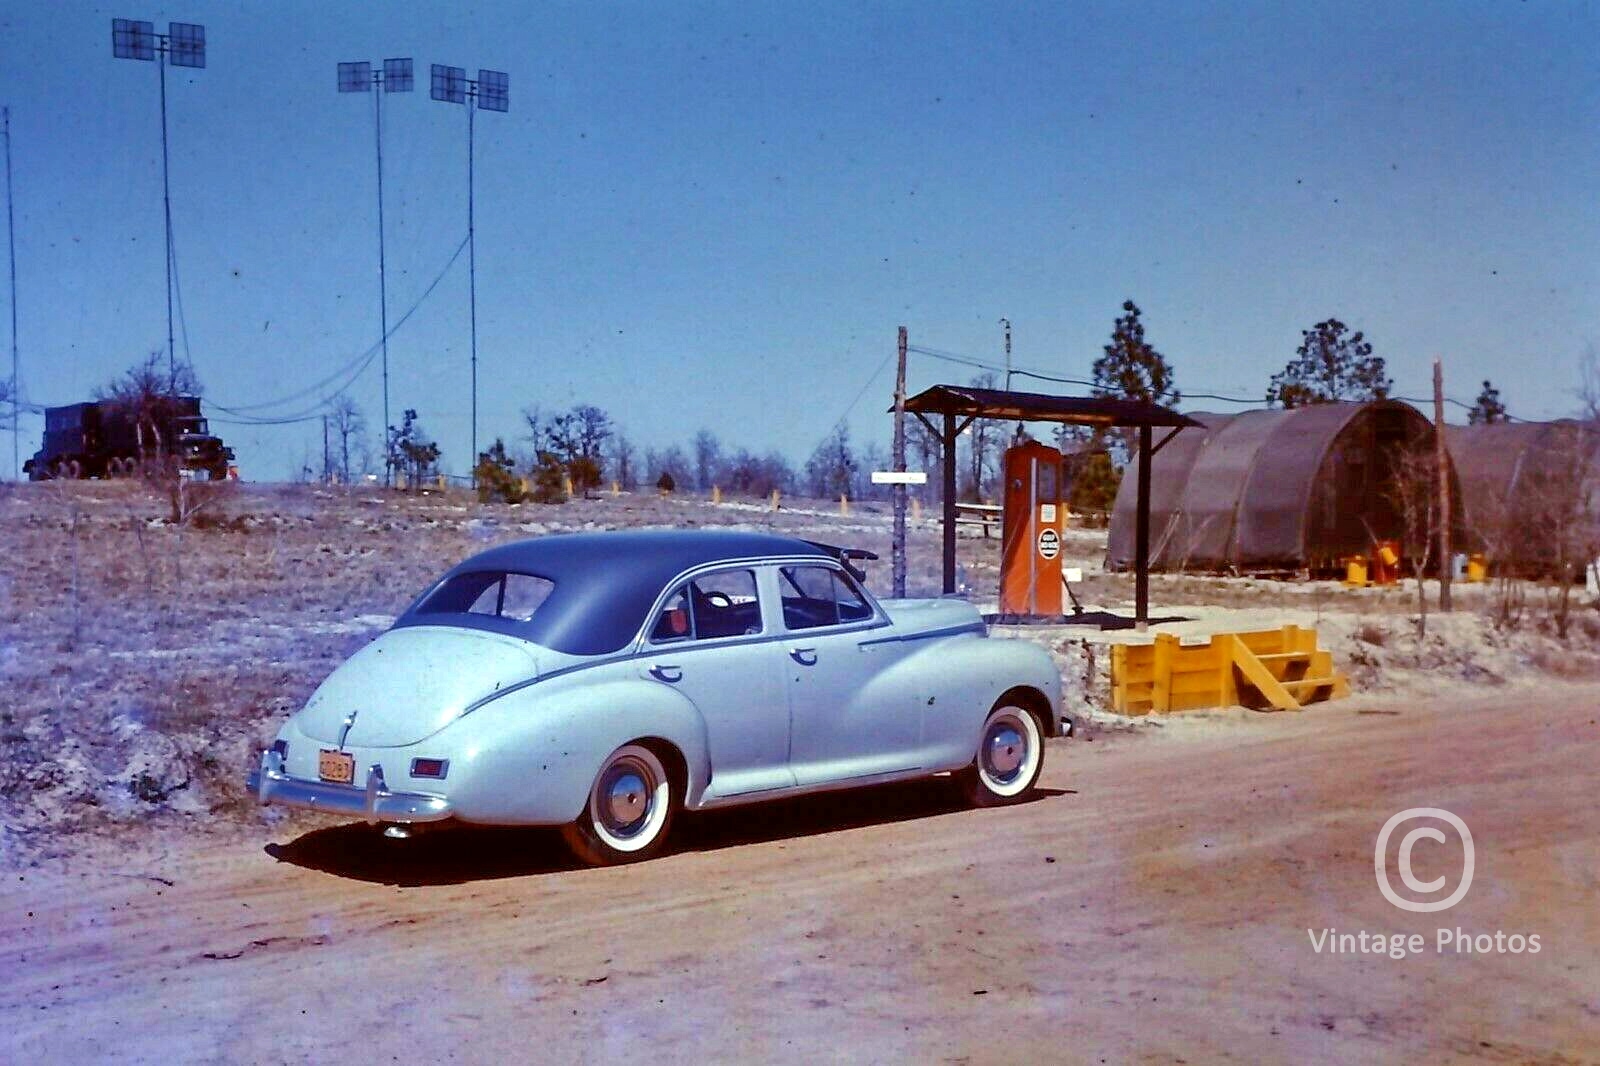 1950s American 2 tone blue Classic Car near Petrol Pump